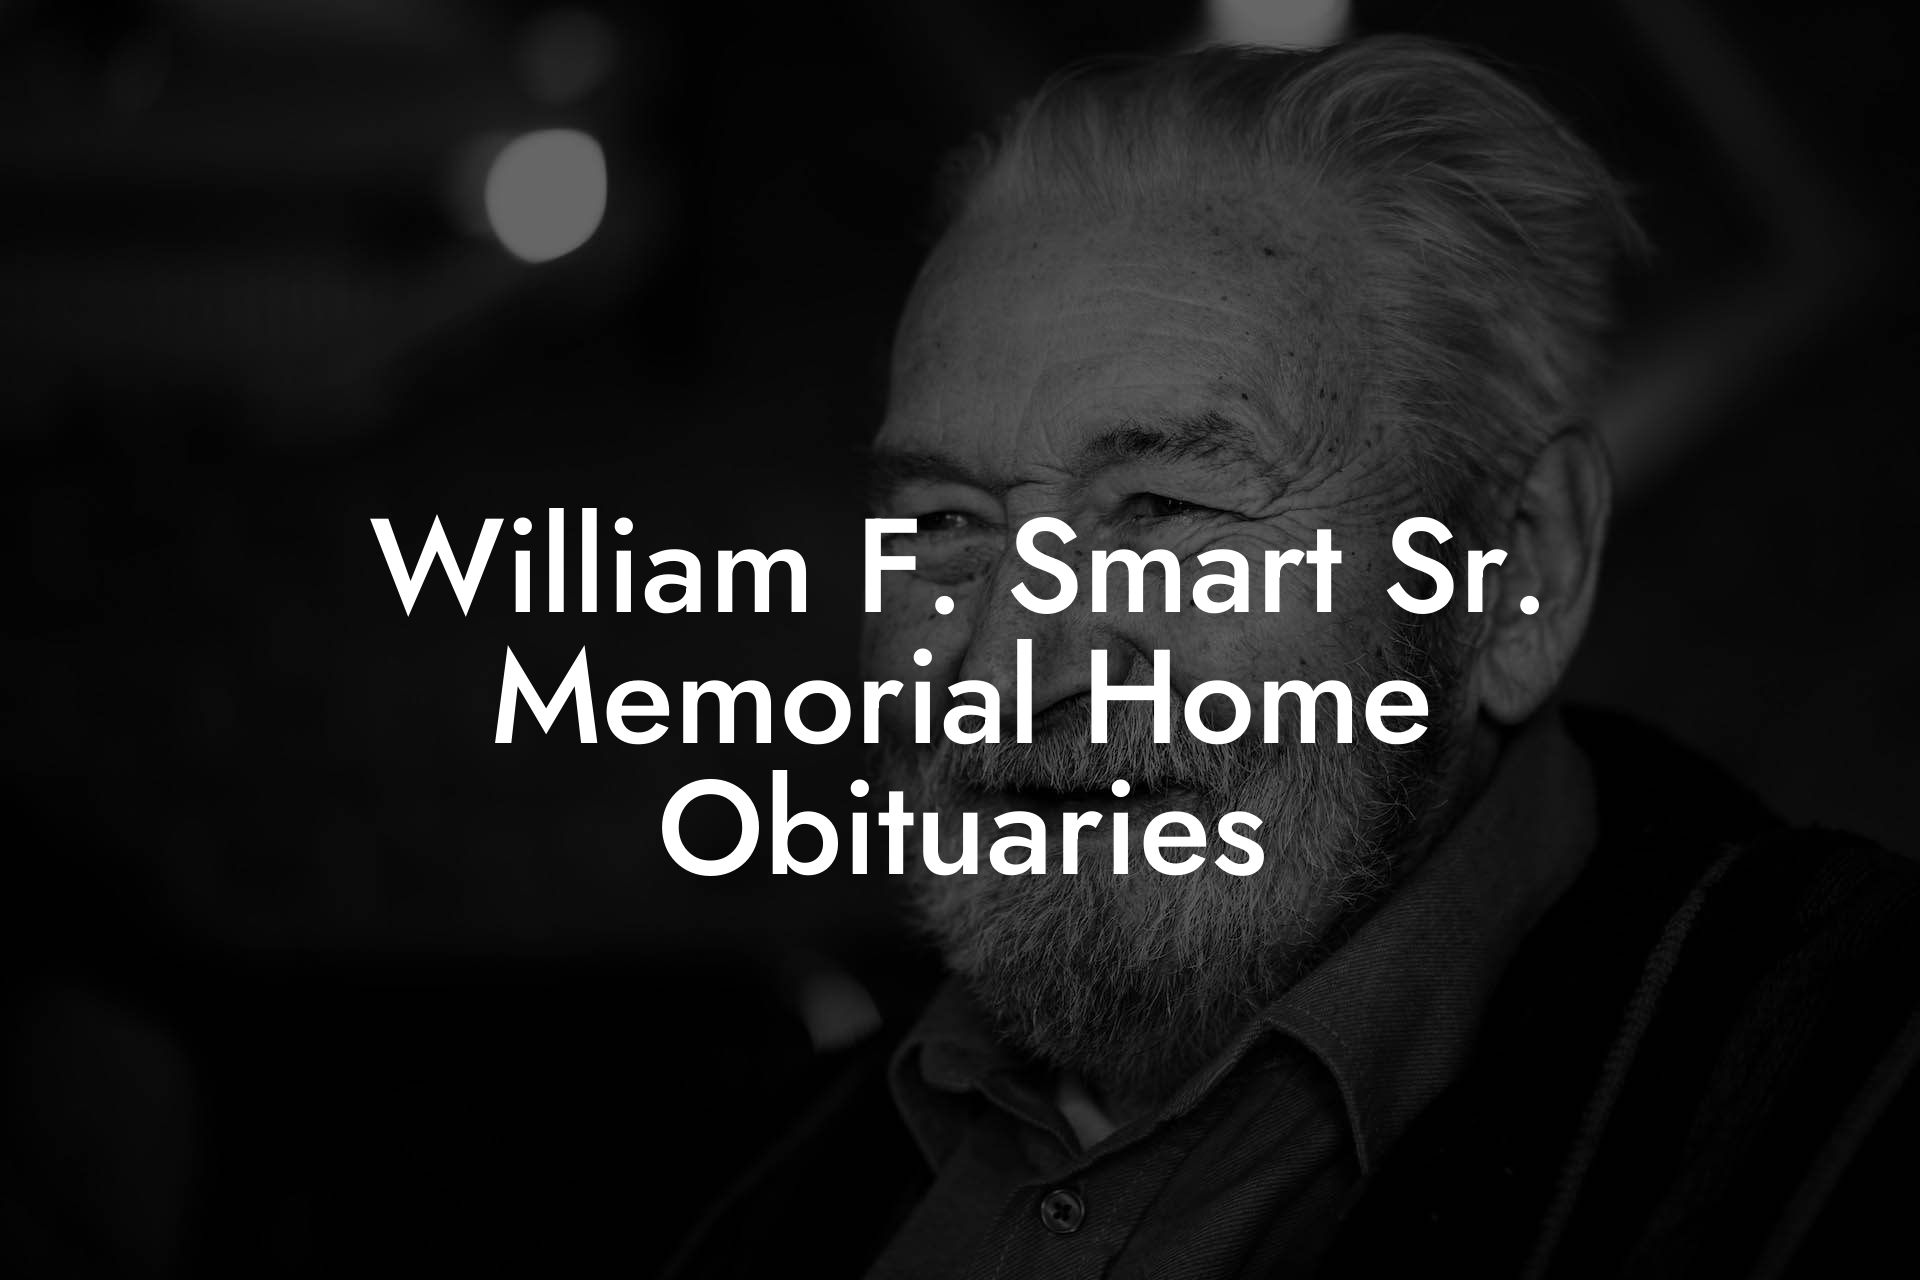 William F. Smart Sr. Memorial Home Obituaries